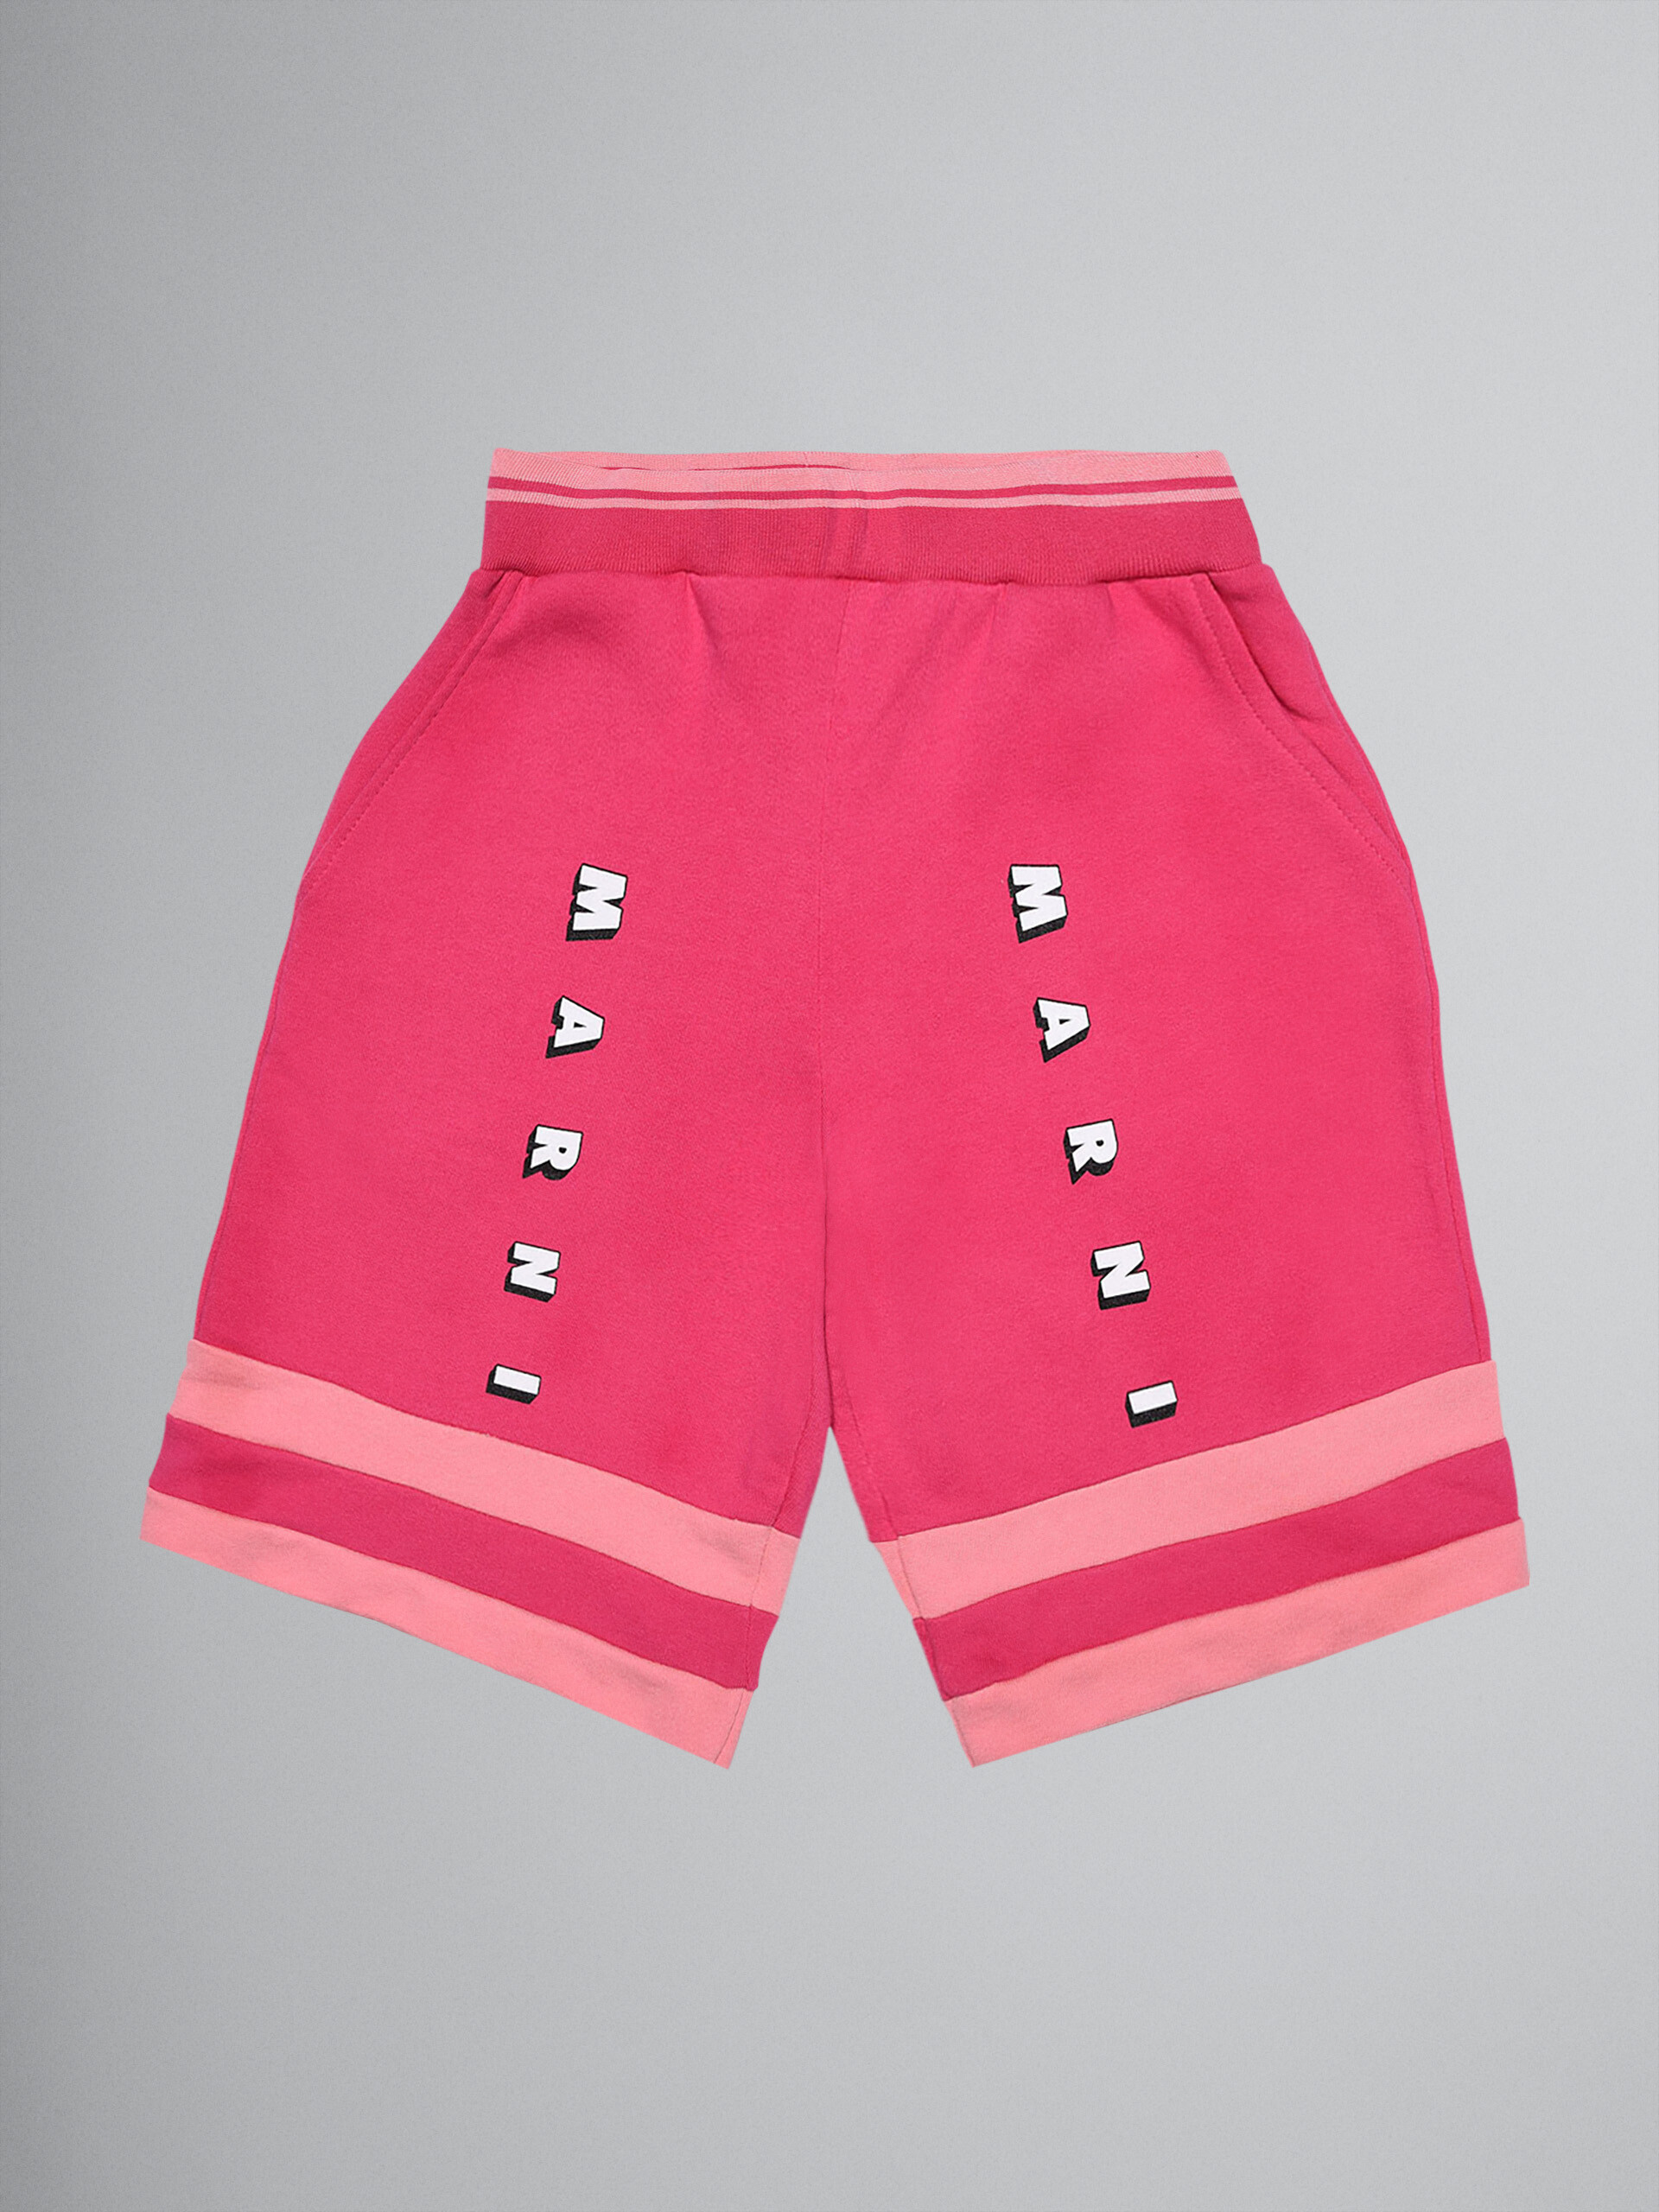 Kurze Laufhose aus rosafarbener Baumwolle im Colourblock-Stil - Hosen - Image 1